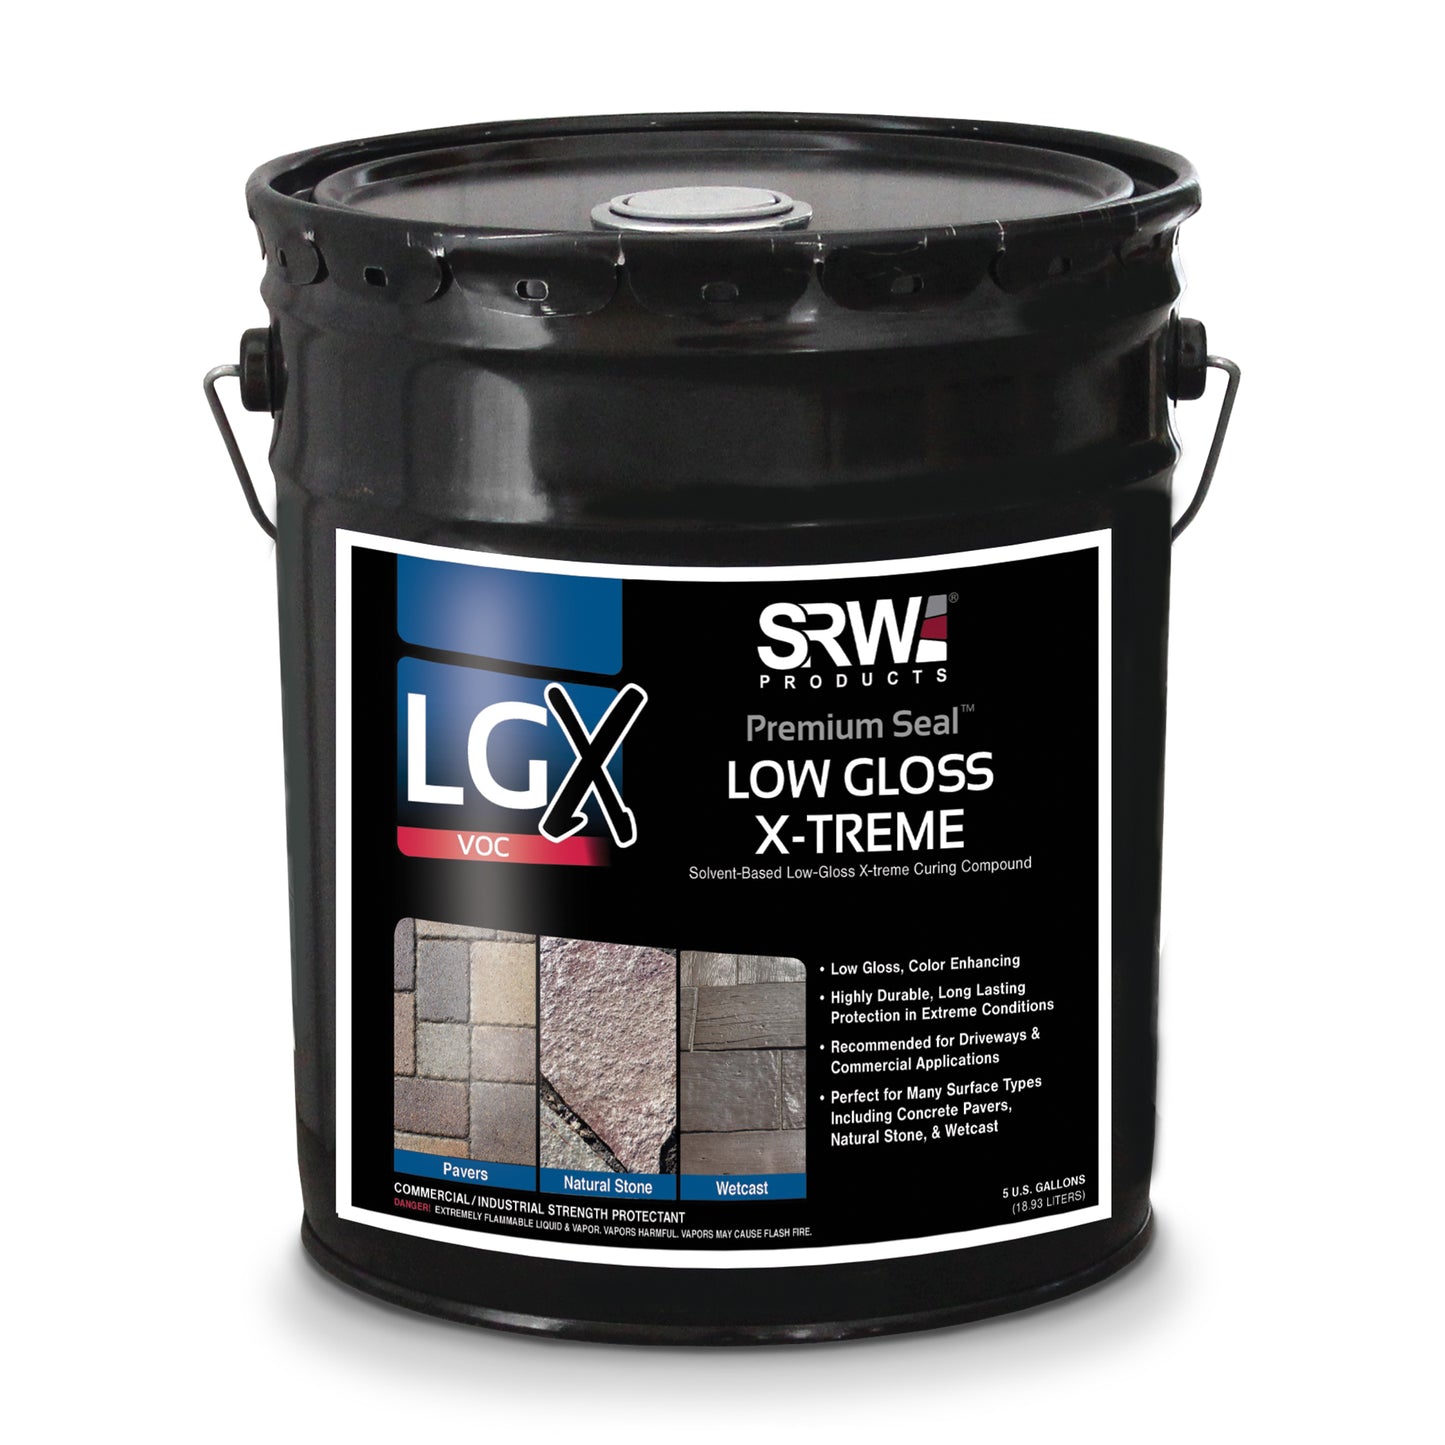 SRW Products LGX VOC Low Gloss X-Treme - Premium Seal™